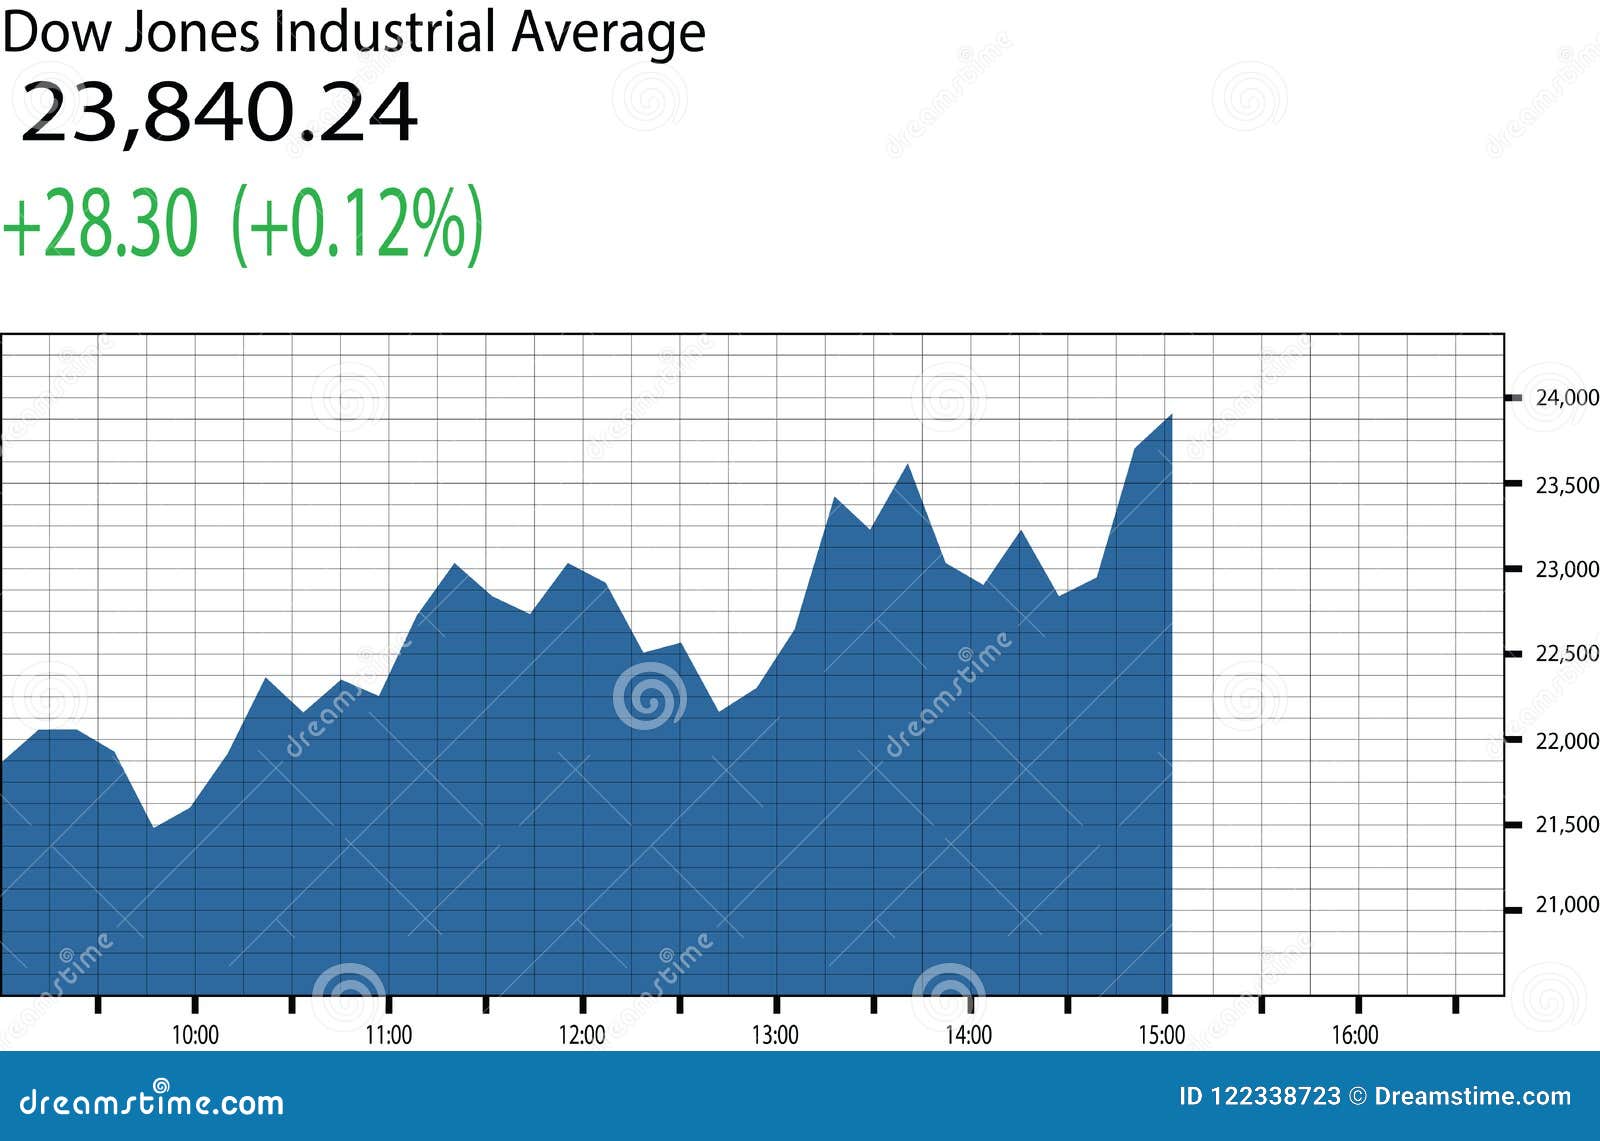 Dj Industrial Average Chart